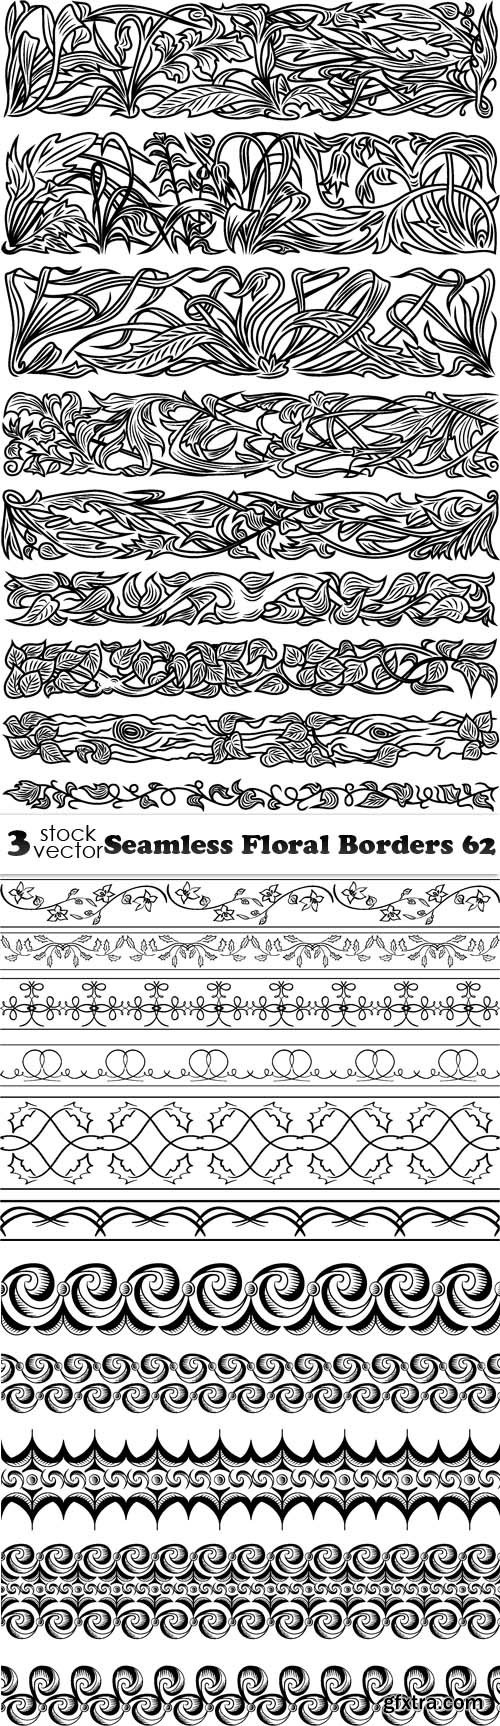 Vectors - Seamless Floral Borders 62